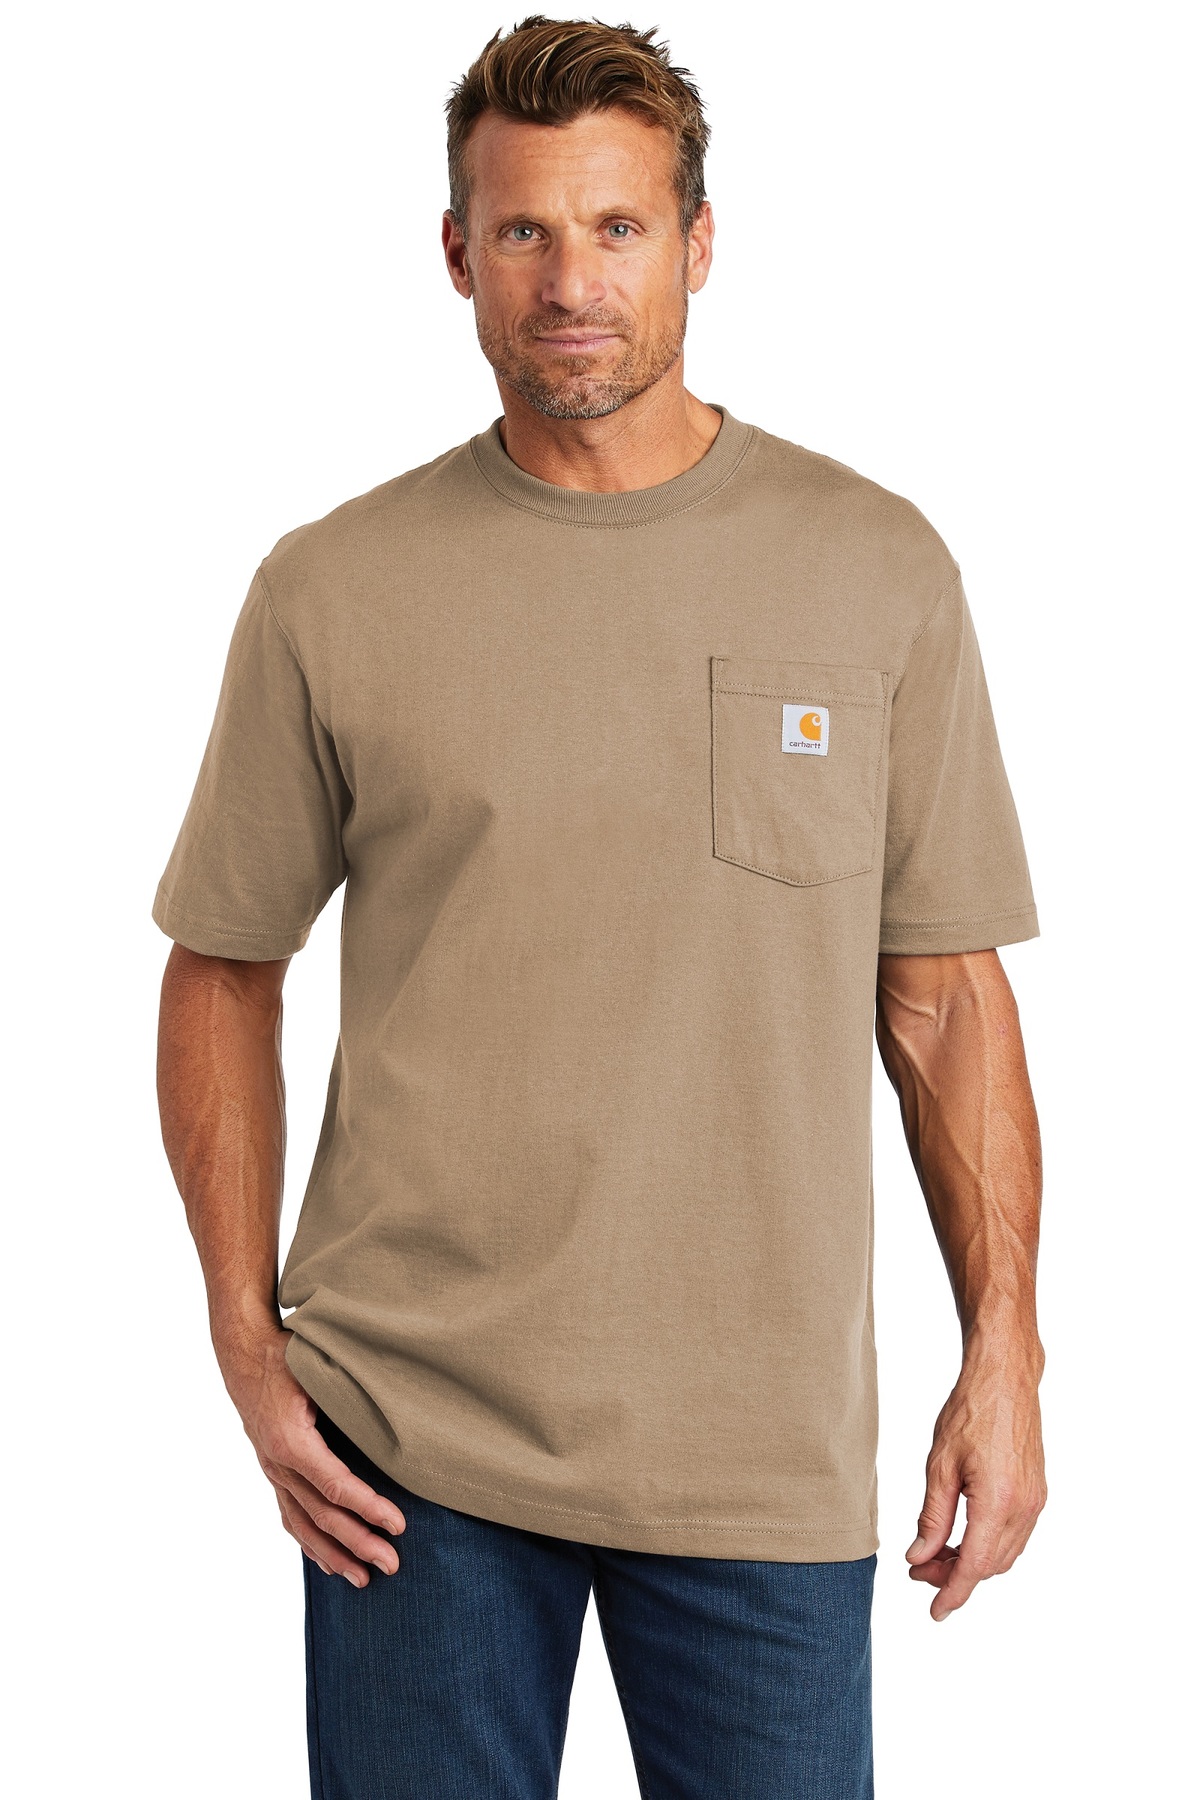 Carhartt Embroidered Men's Workwear Pocket T-Shirt - Queensboro